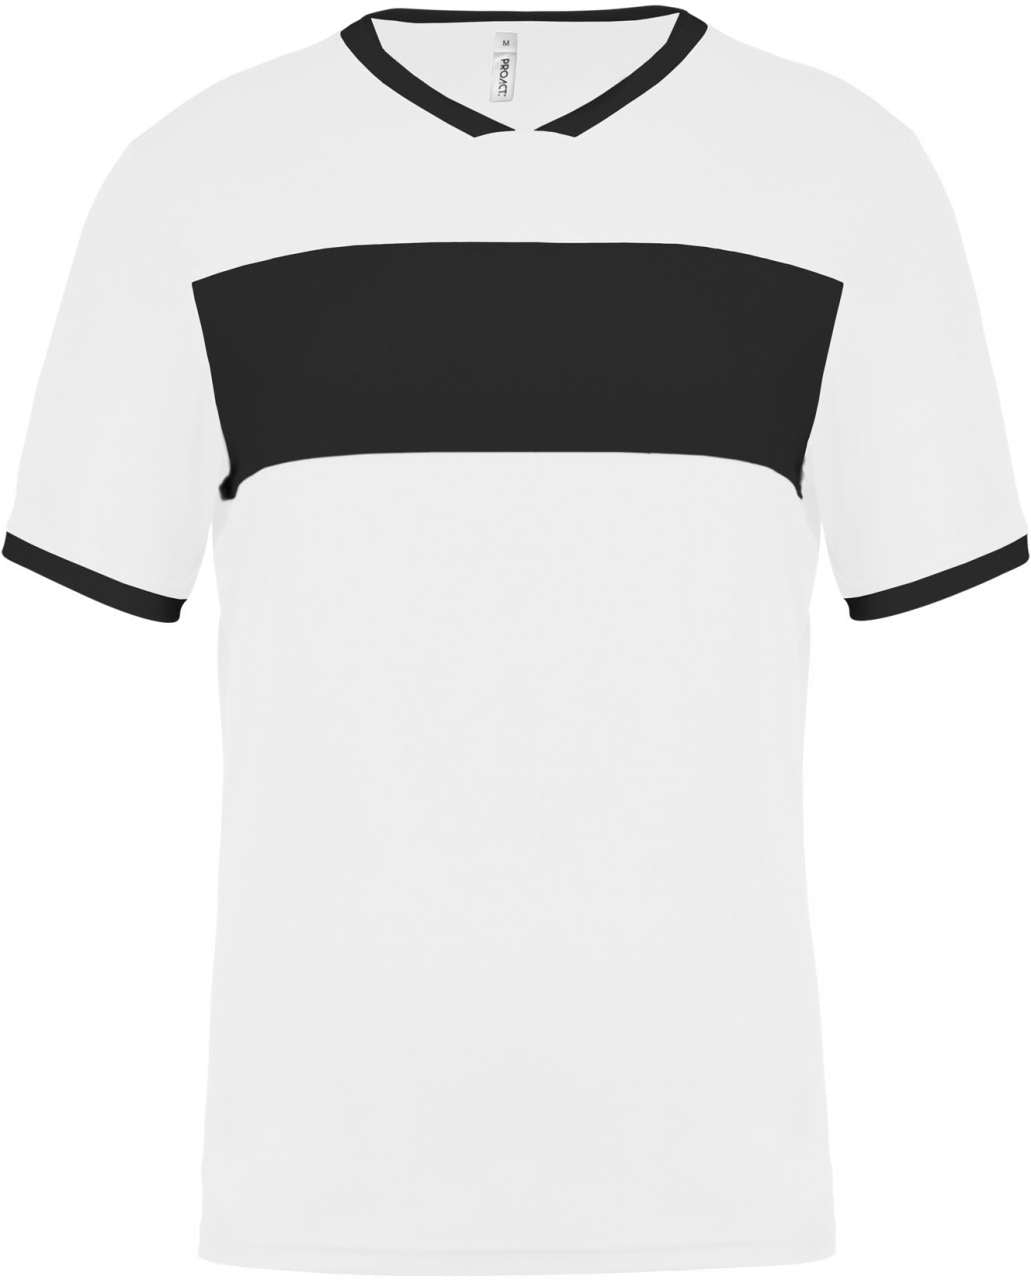 Proact Herren Sport T-Shirt Baumwolle Rundhals Kurzarm Shirt Slim Fit